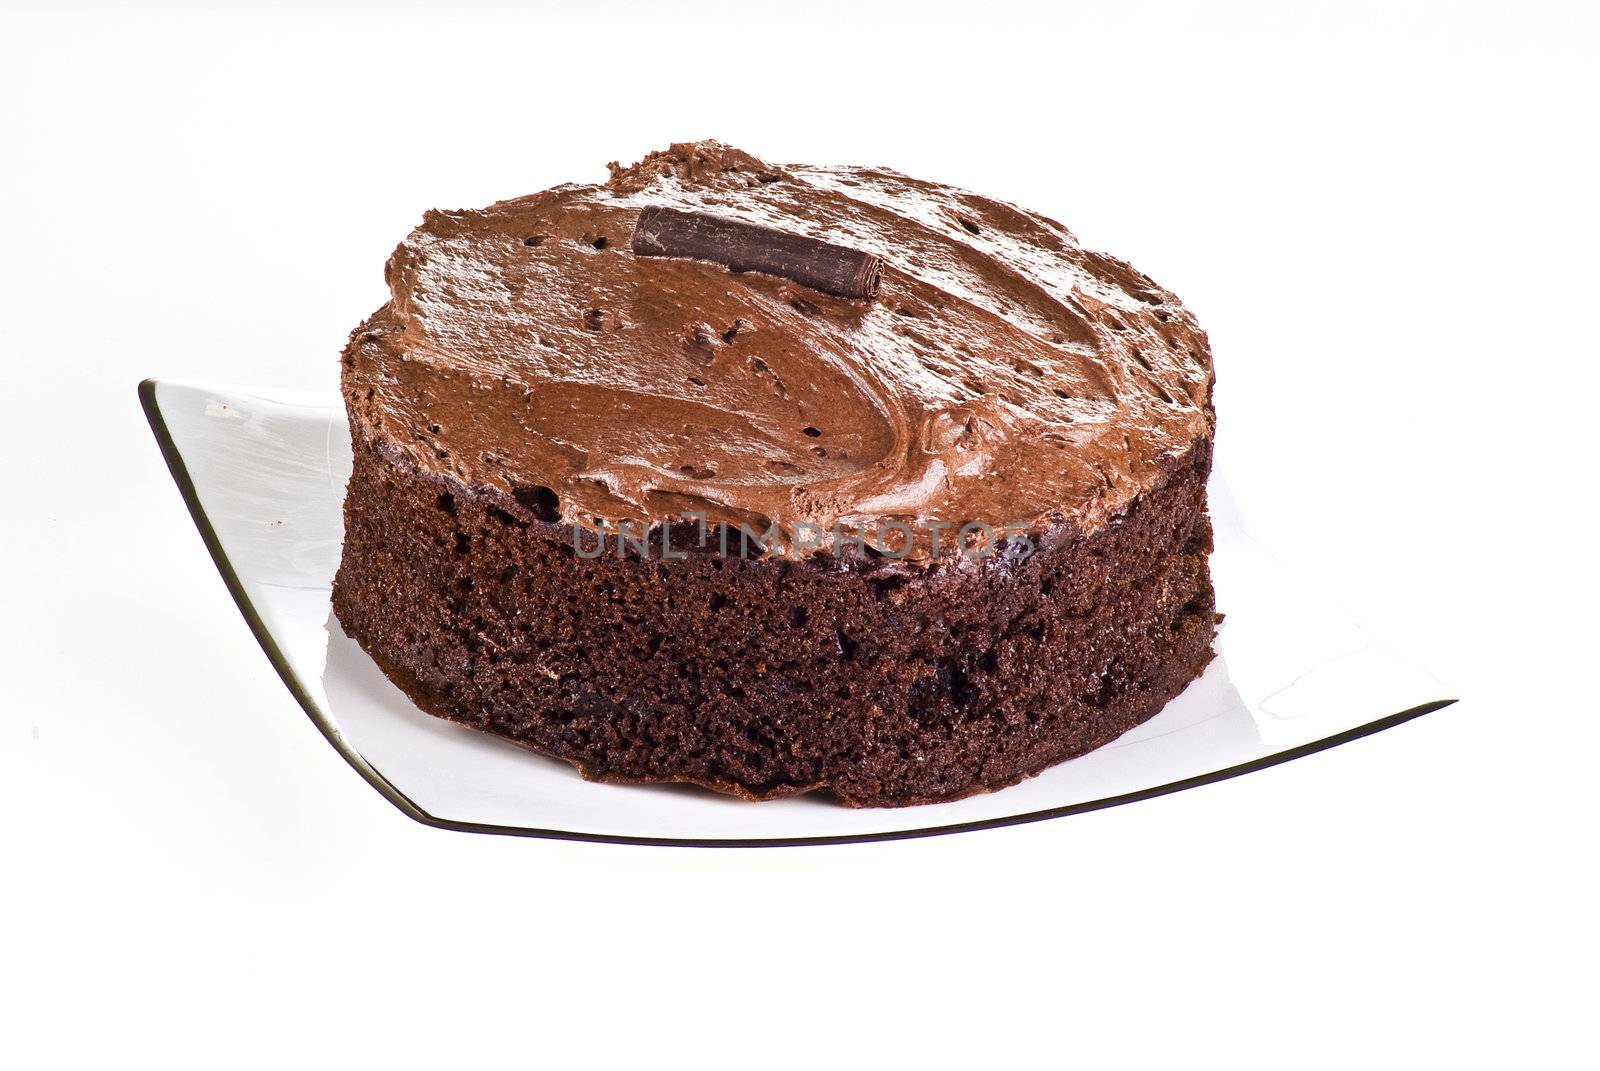 Dark brown chocolate cake over white background